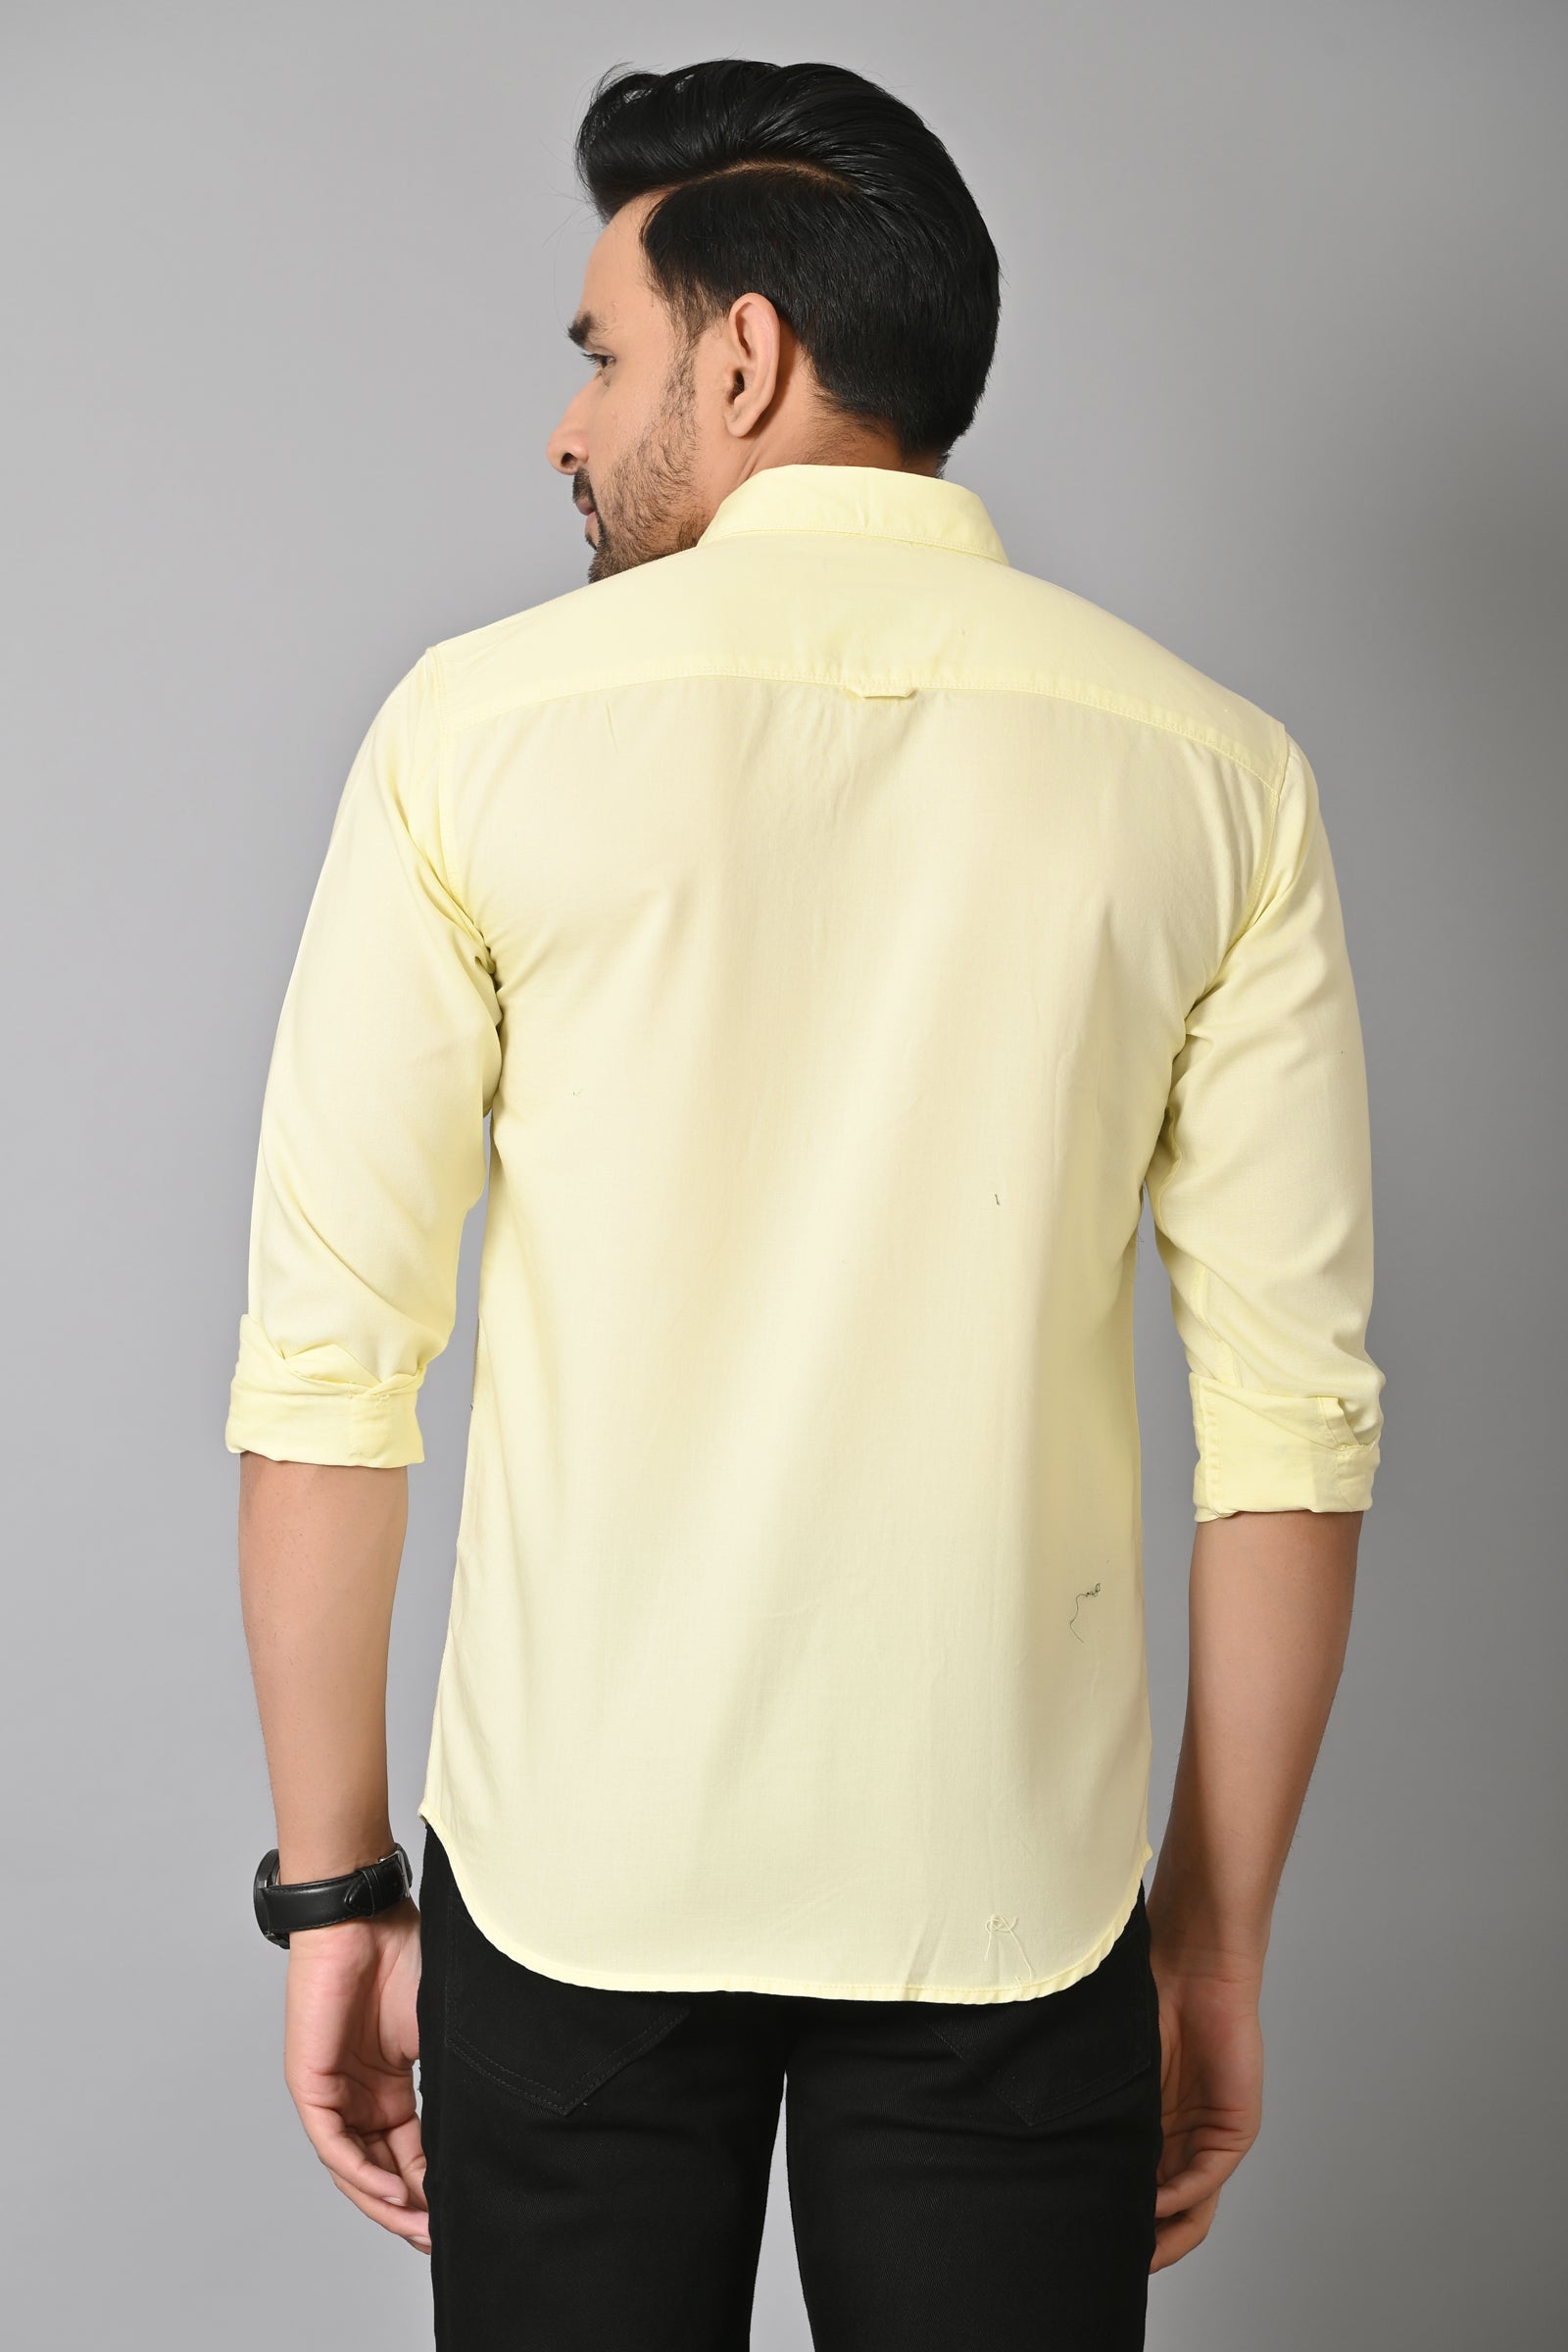 Jaguro Men's Formal shirt Cotton Lemon Yellow